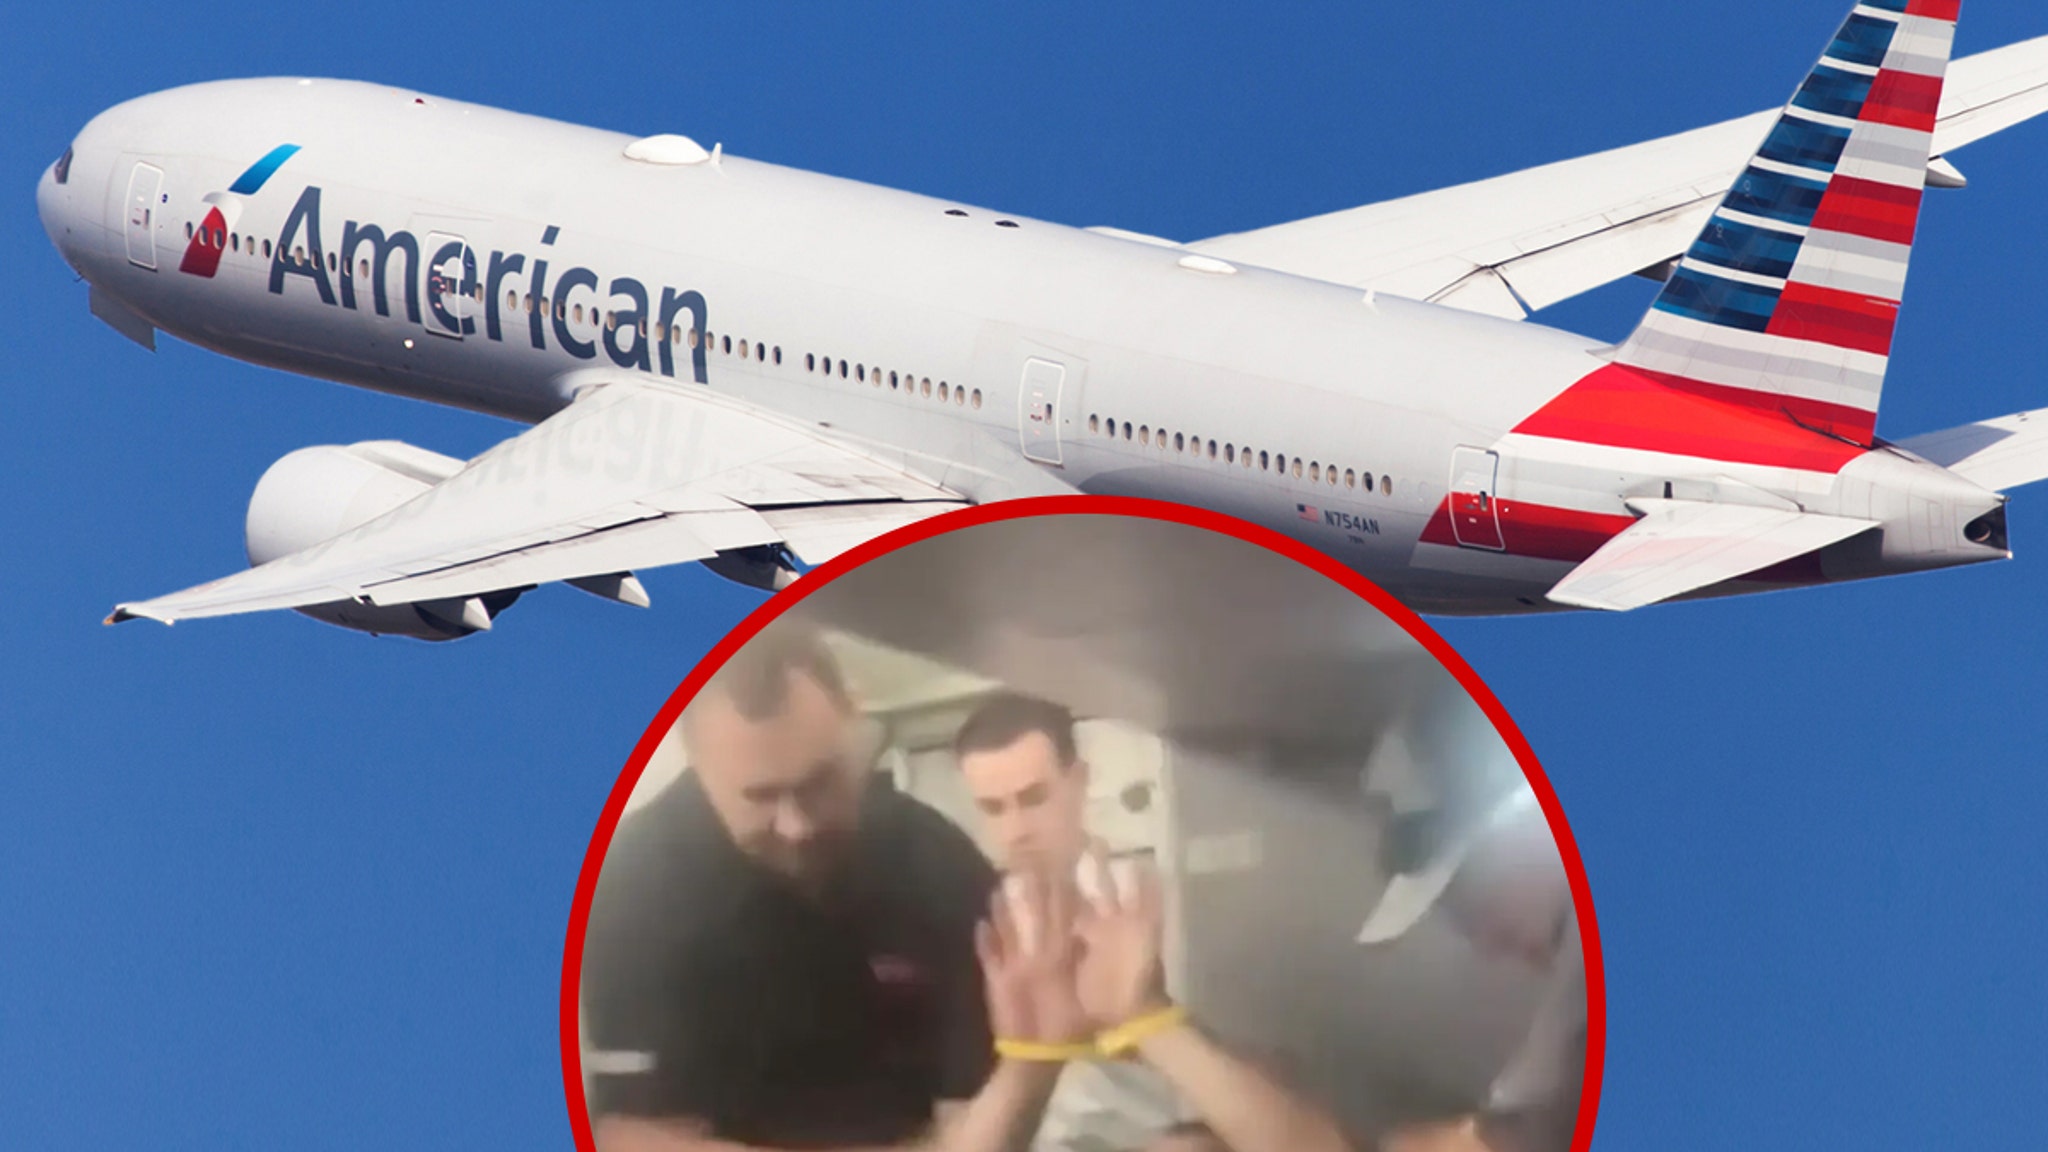 NJ Passenger's Mid-Flight Meltdown On Camera, Allegedly Asked Attendant For Sex